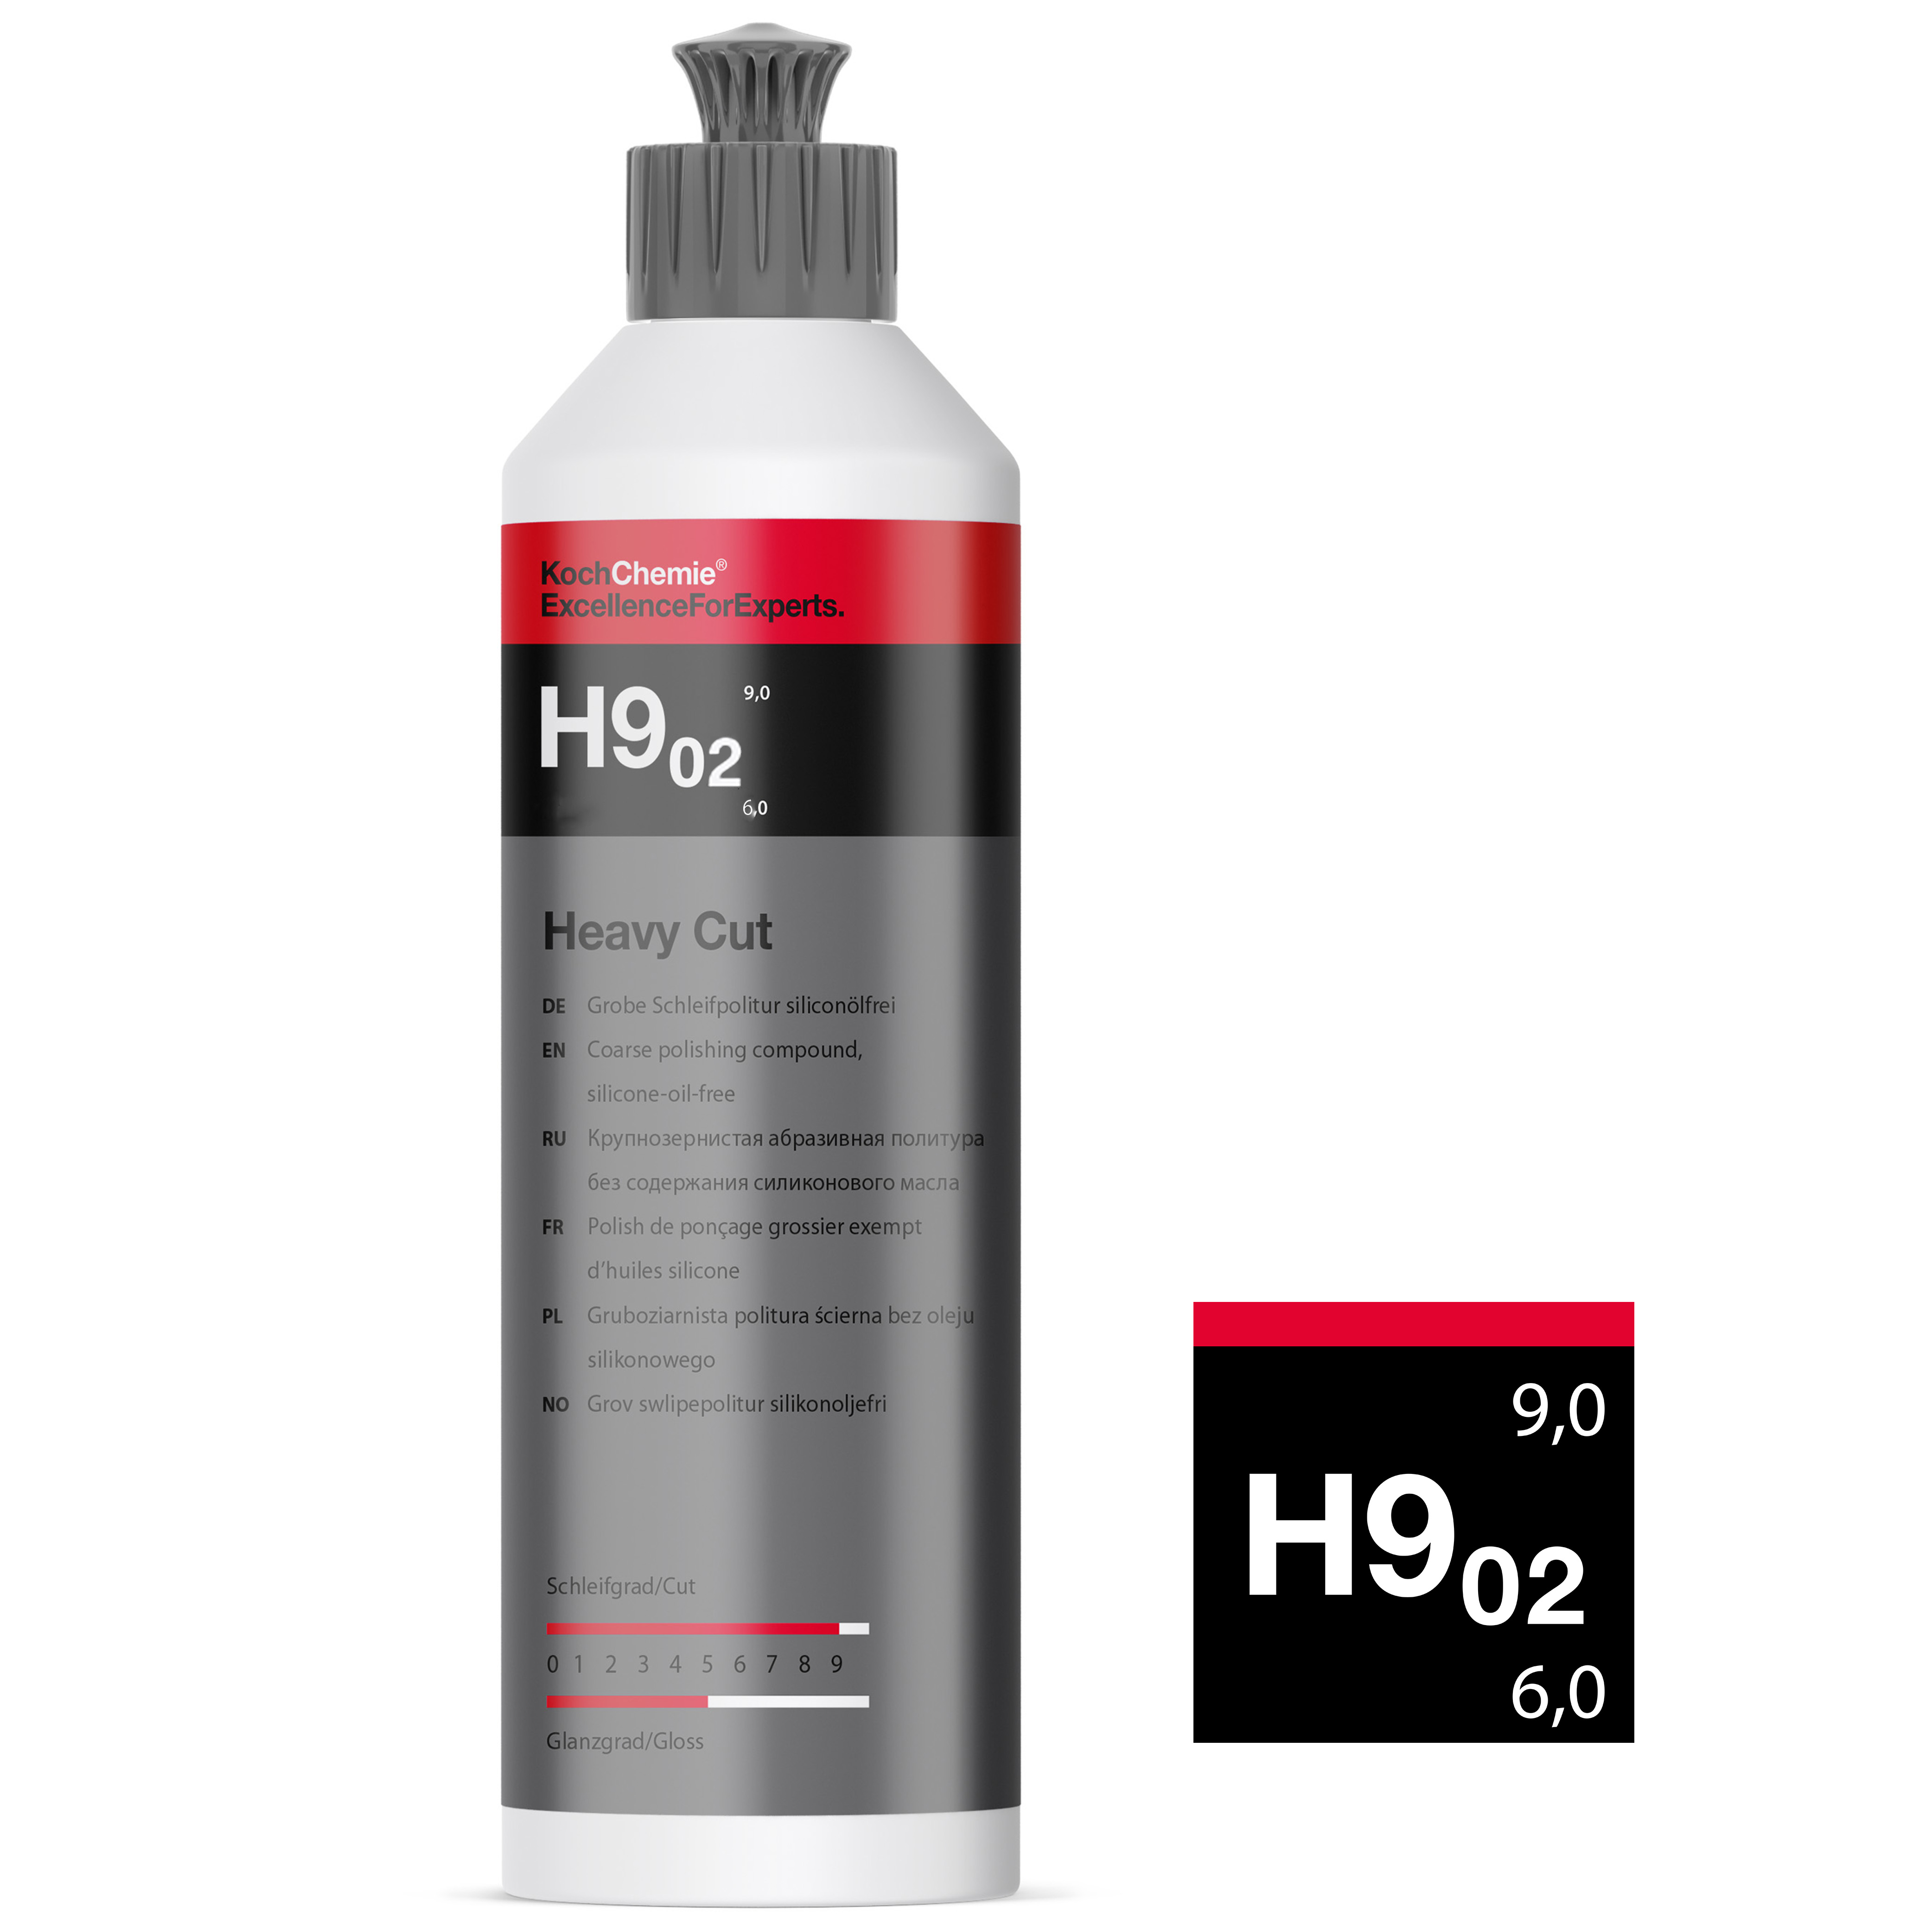 Koch Chemie H9.02 Heavy Cut Grobe Schleifpolitur silikonölfrei 0,25L